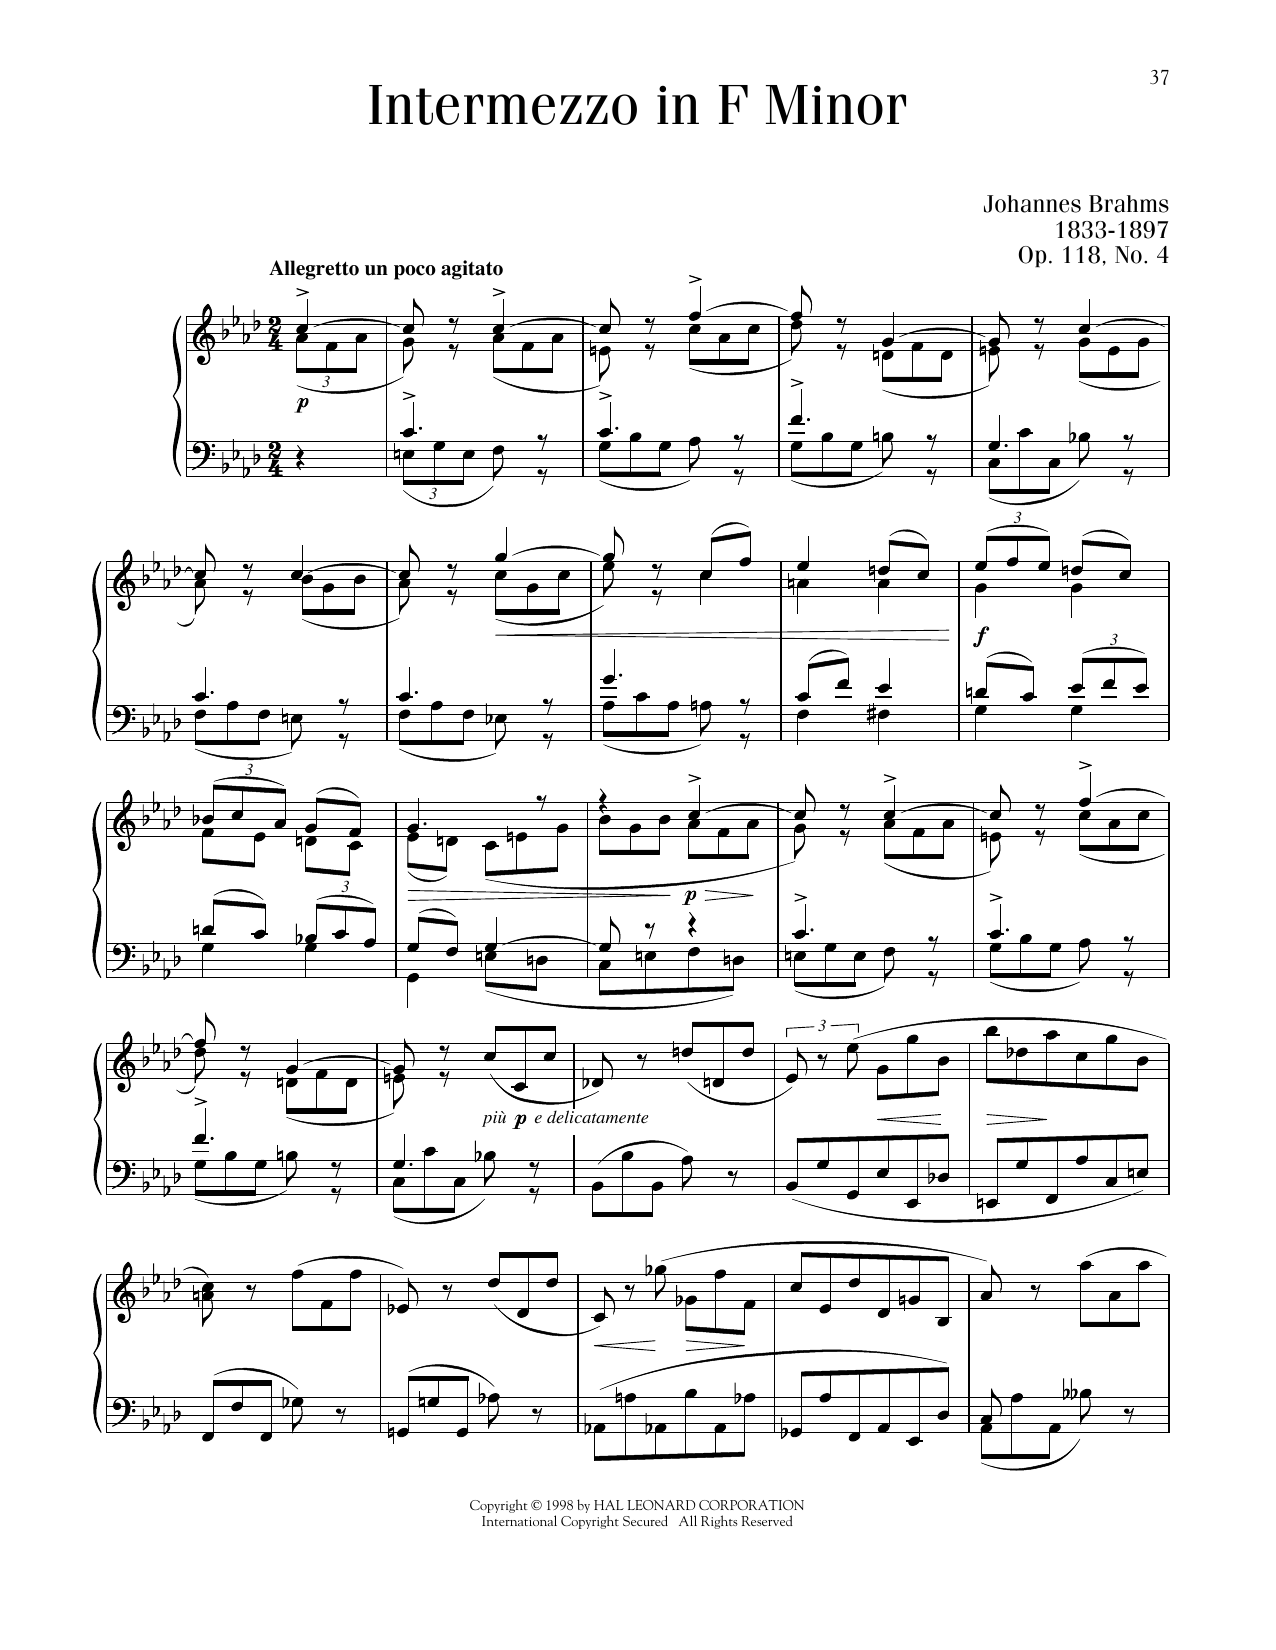 Johannes Brahms Intermezzo, Op. 118, No. 4 sheet music notes printable PDF score